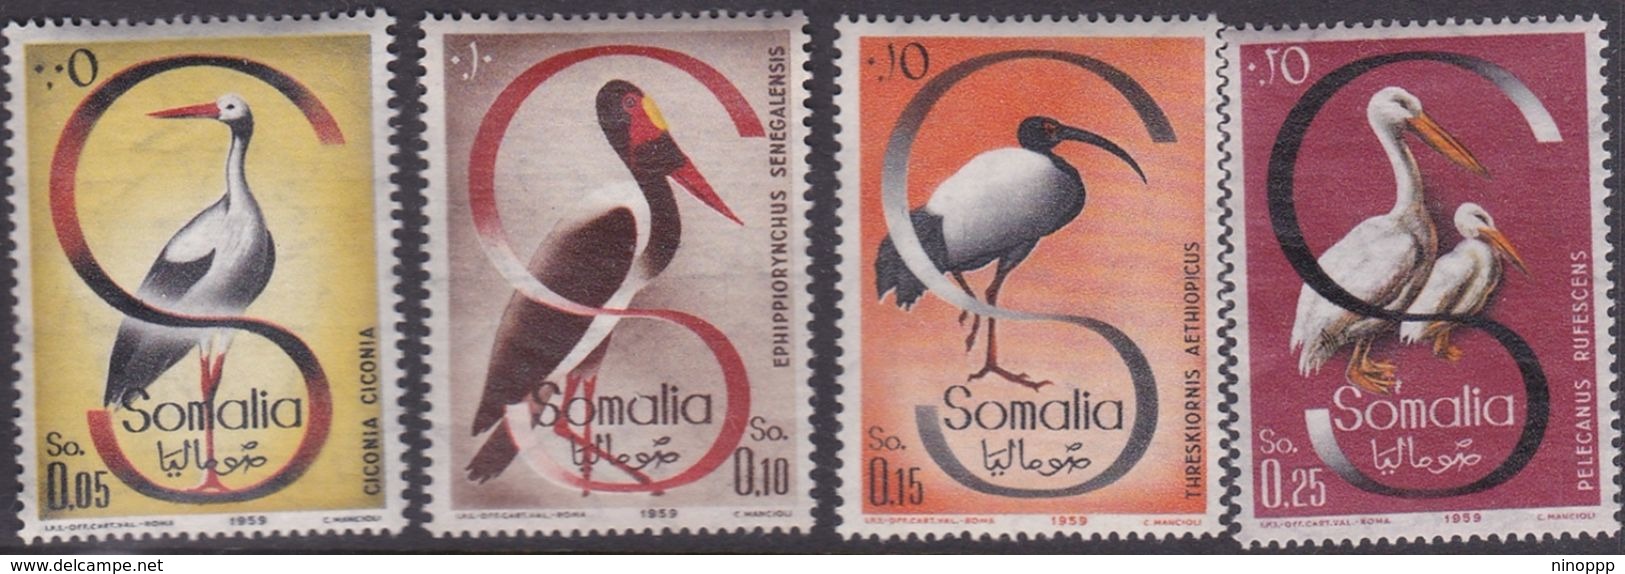 Somalia Scott 230-233 1959 Birds, Mint Never Hinged - Somalie (AFIS)